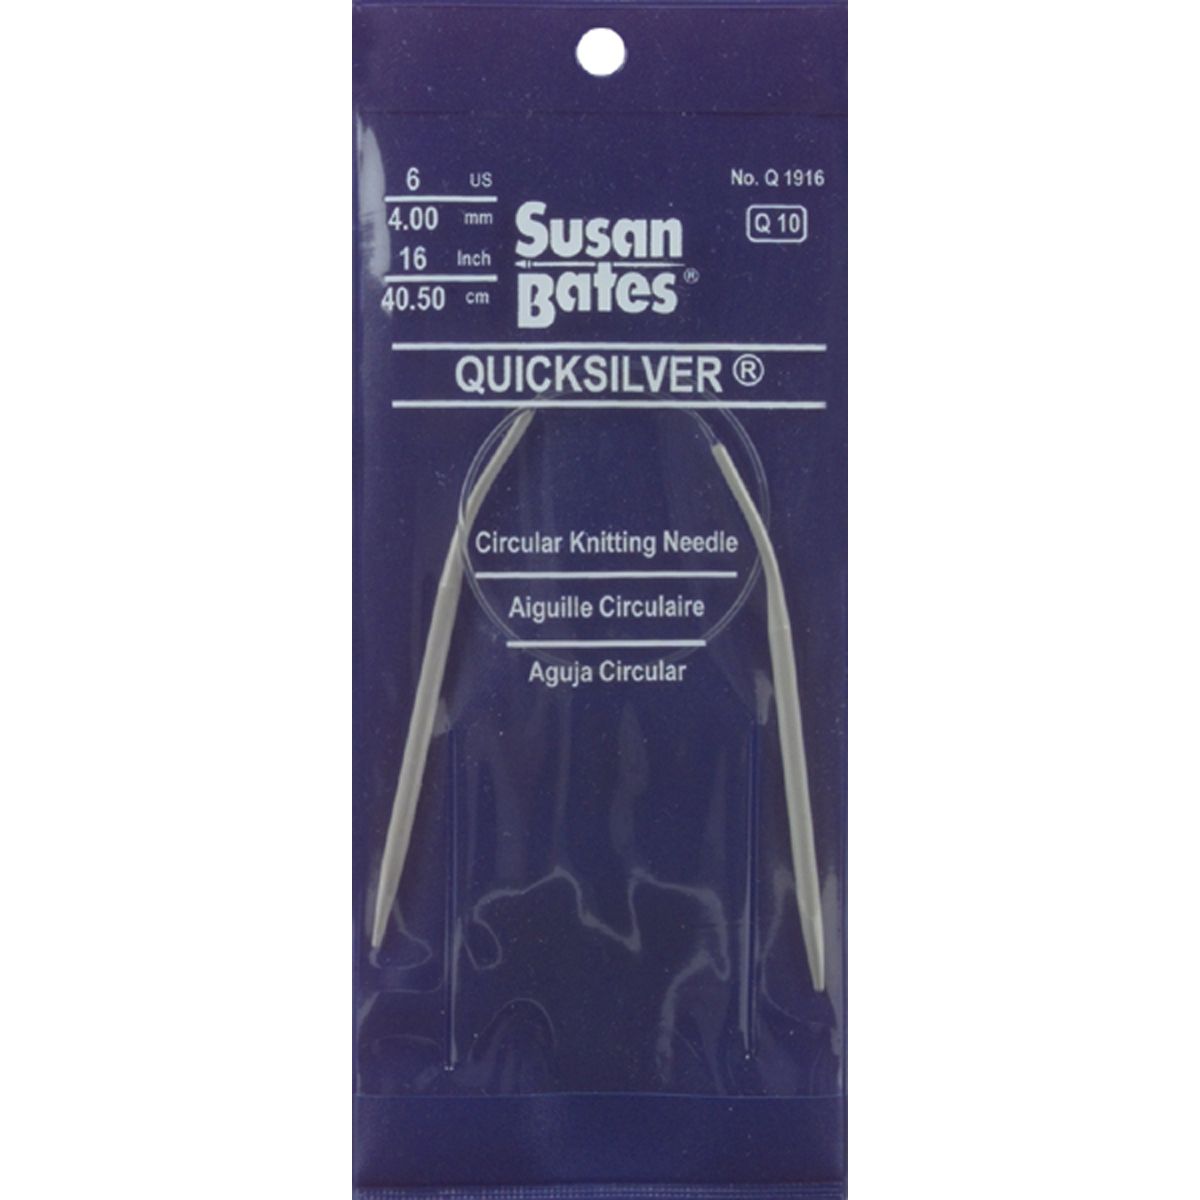 Susan Bates Quicksilver Circular Knitting Needle 24" Size 8